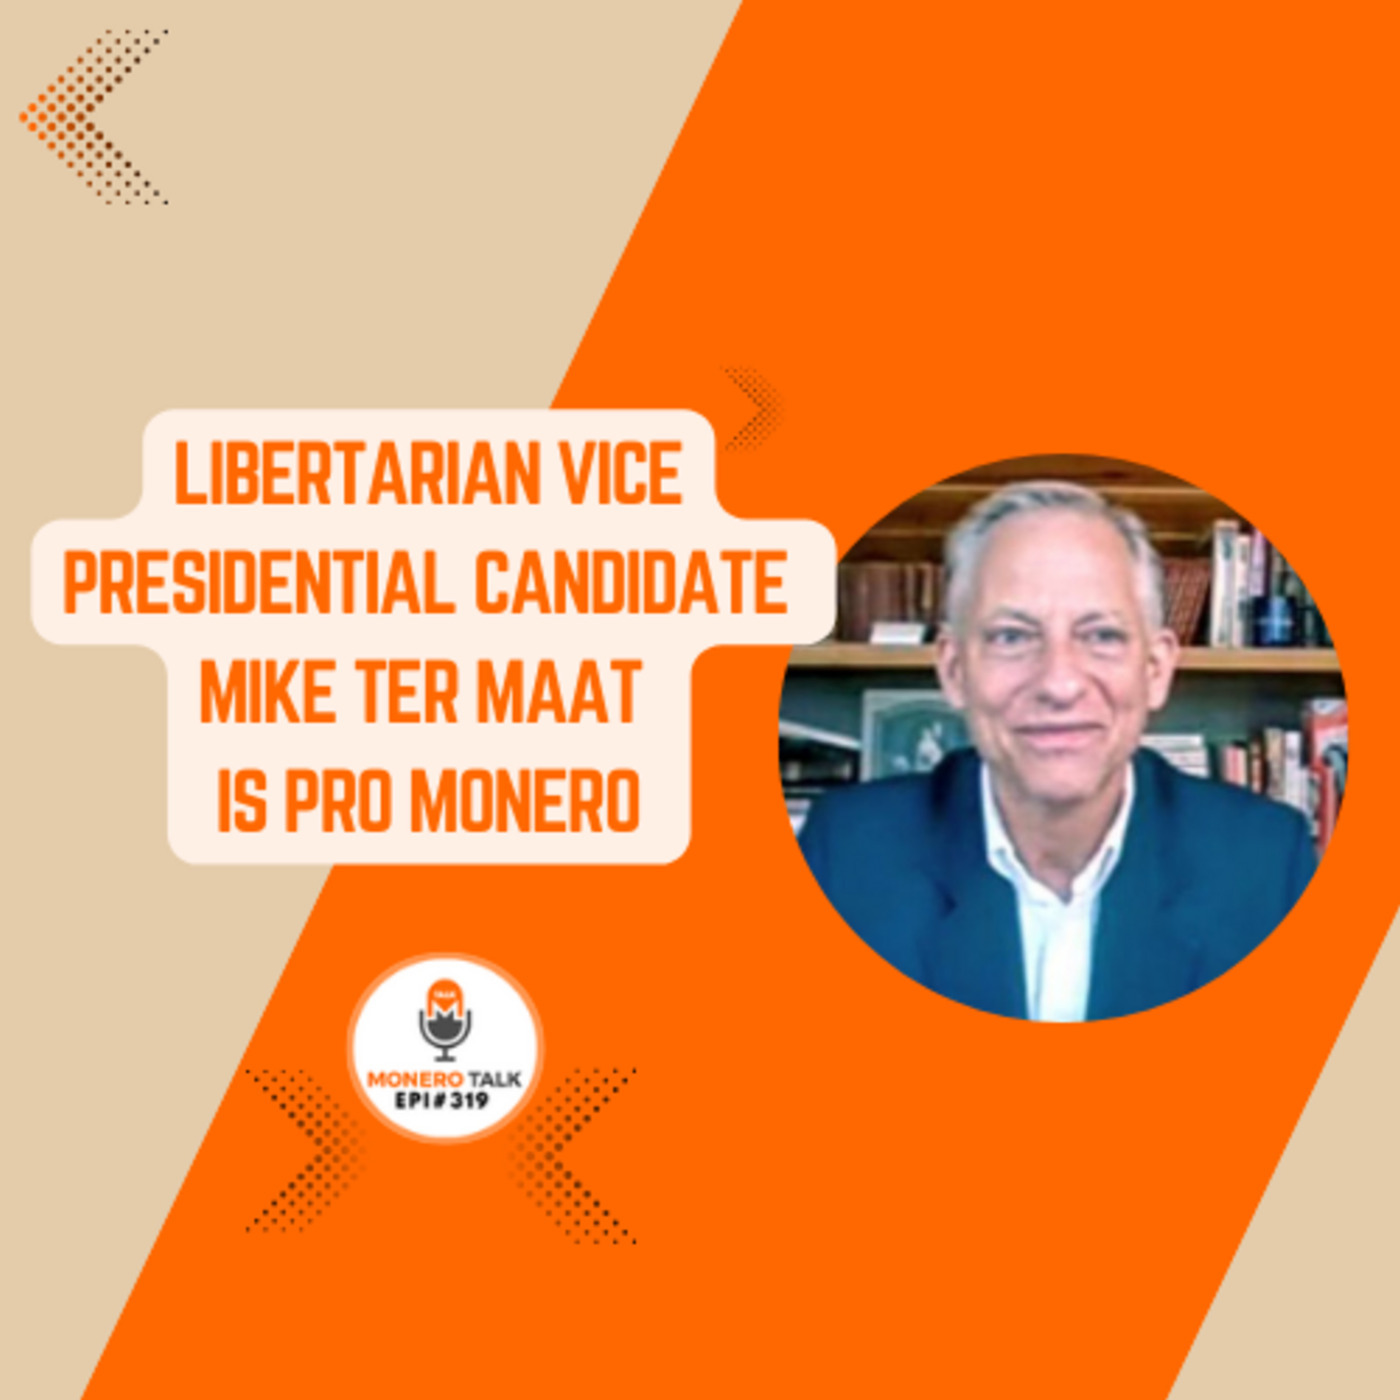 Monero Talk: Libertarian Vice Presidential Candidate Mike Ter Maat is Pro Monero – Monero Talk